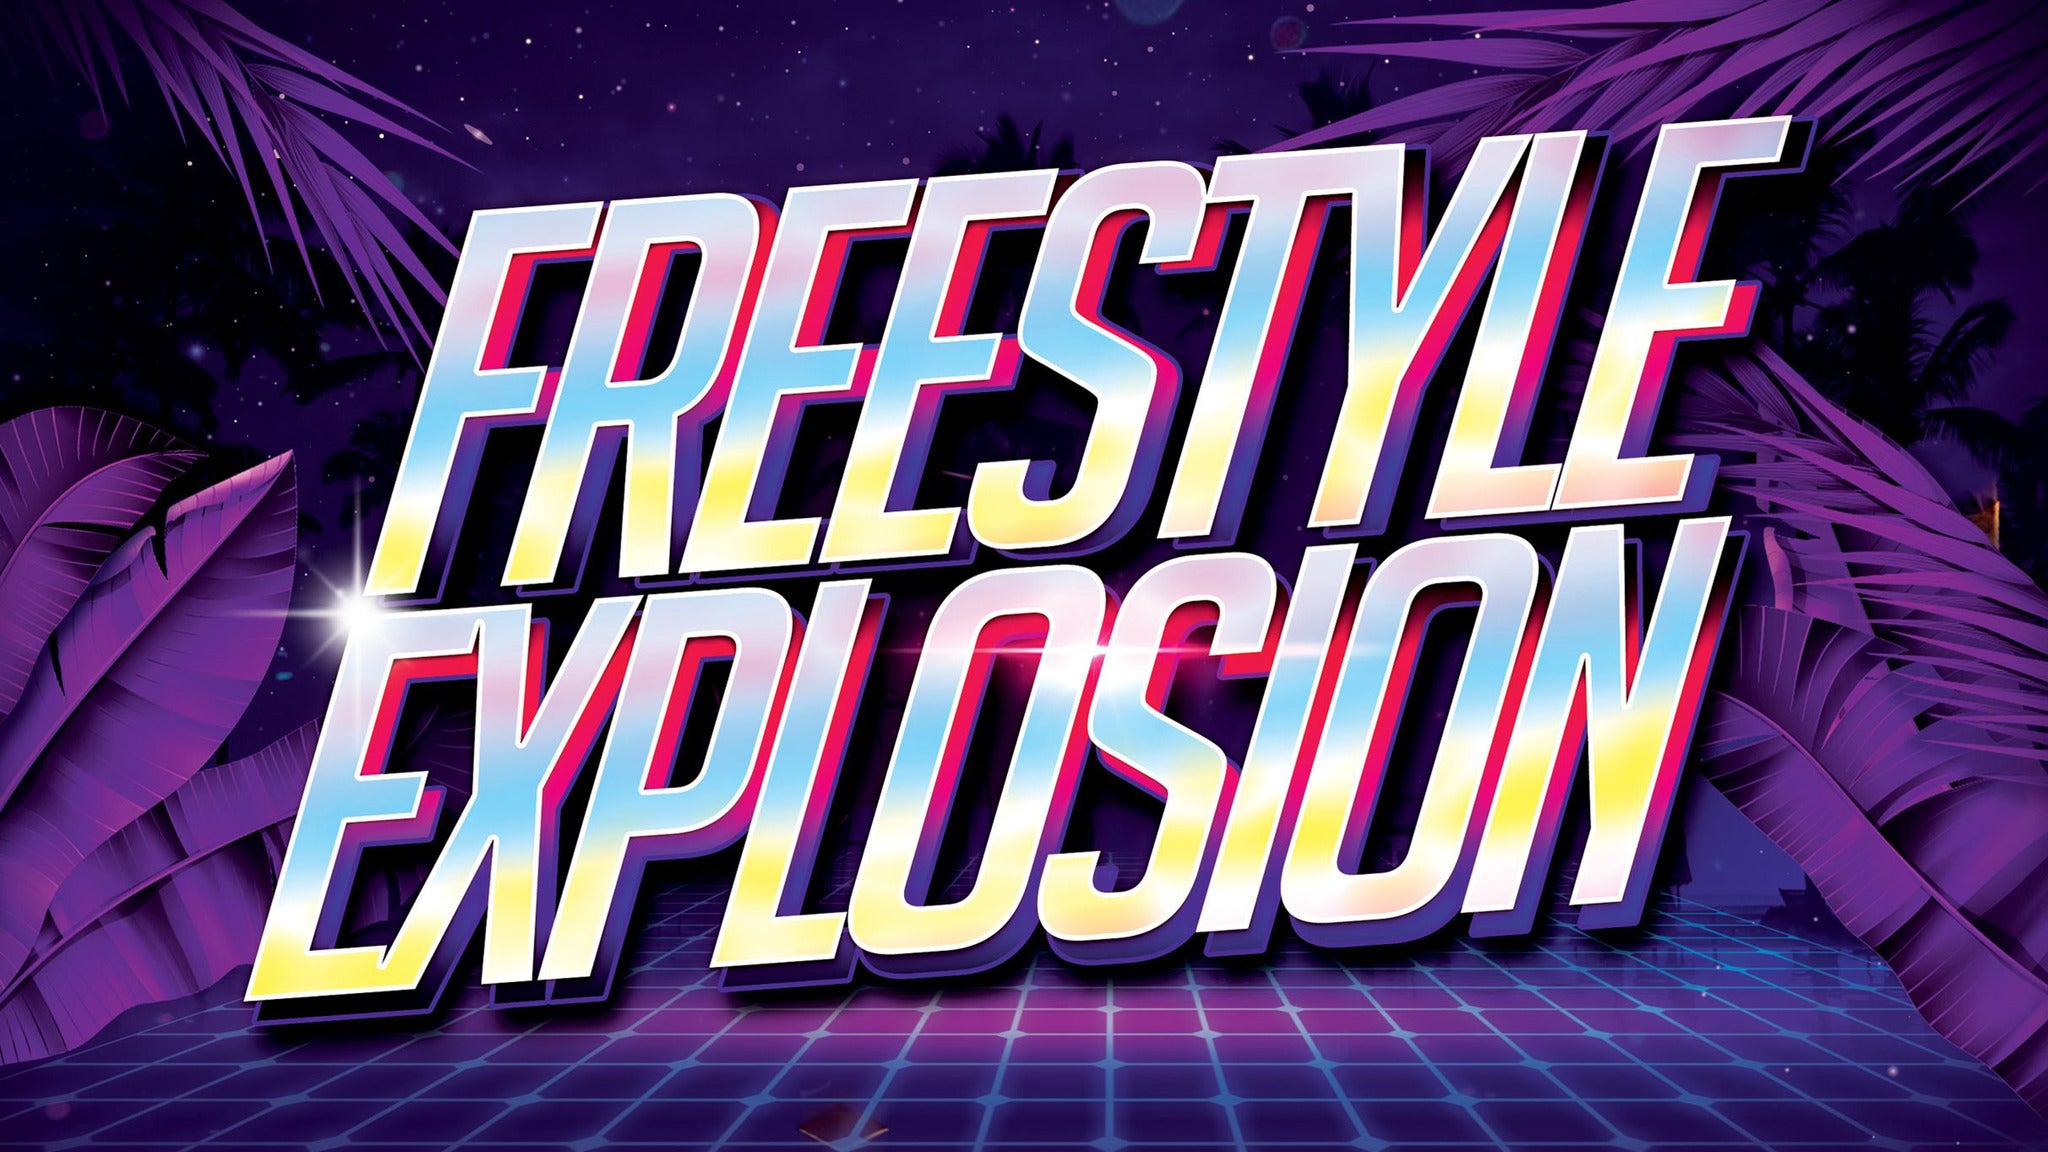 Freestyle Explosion